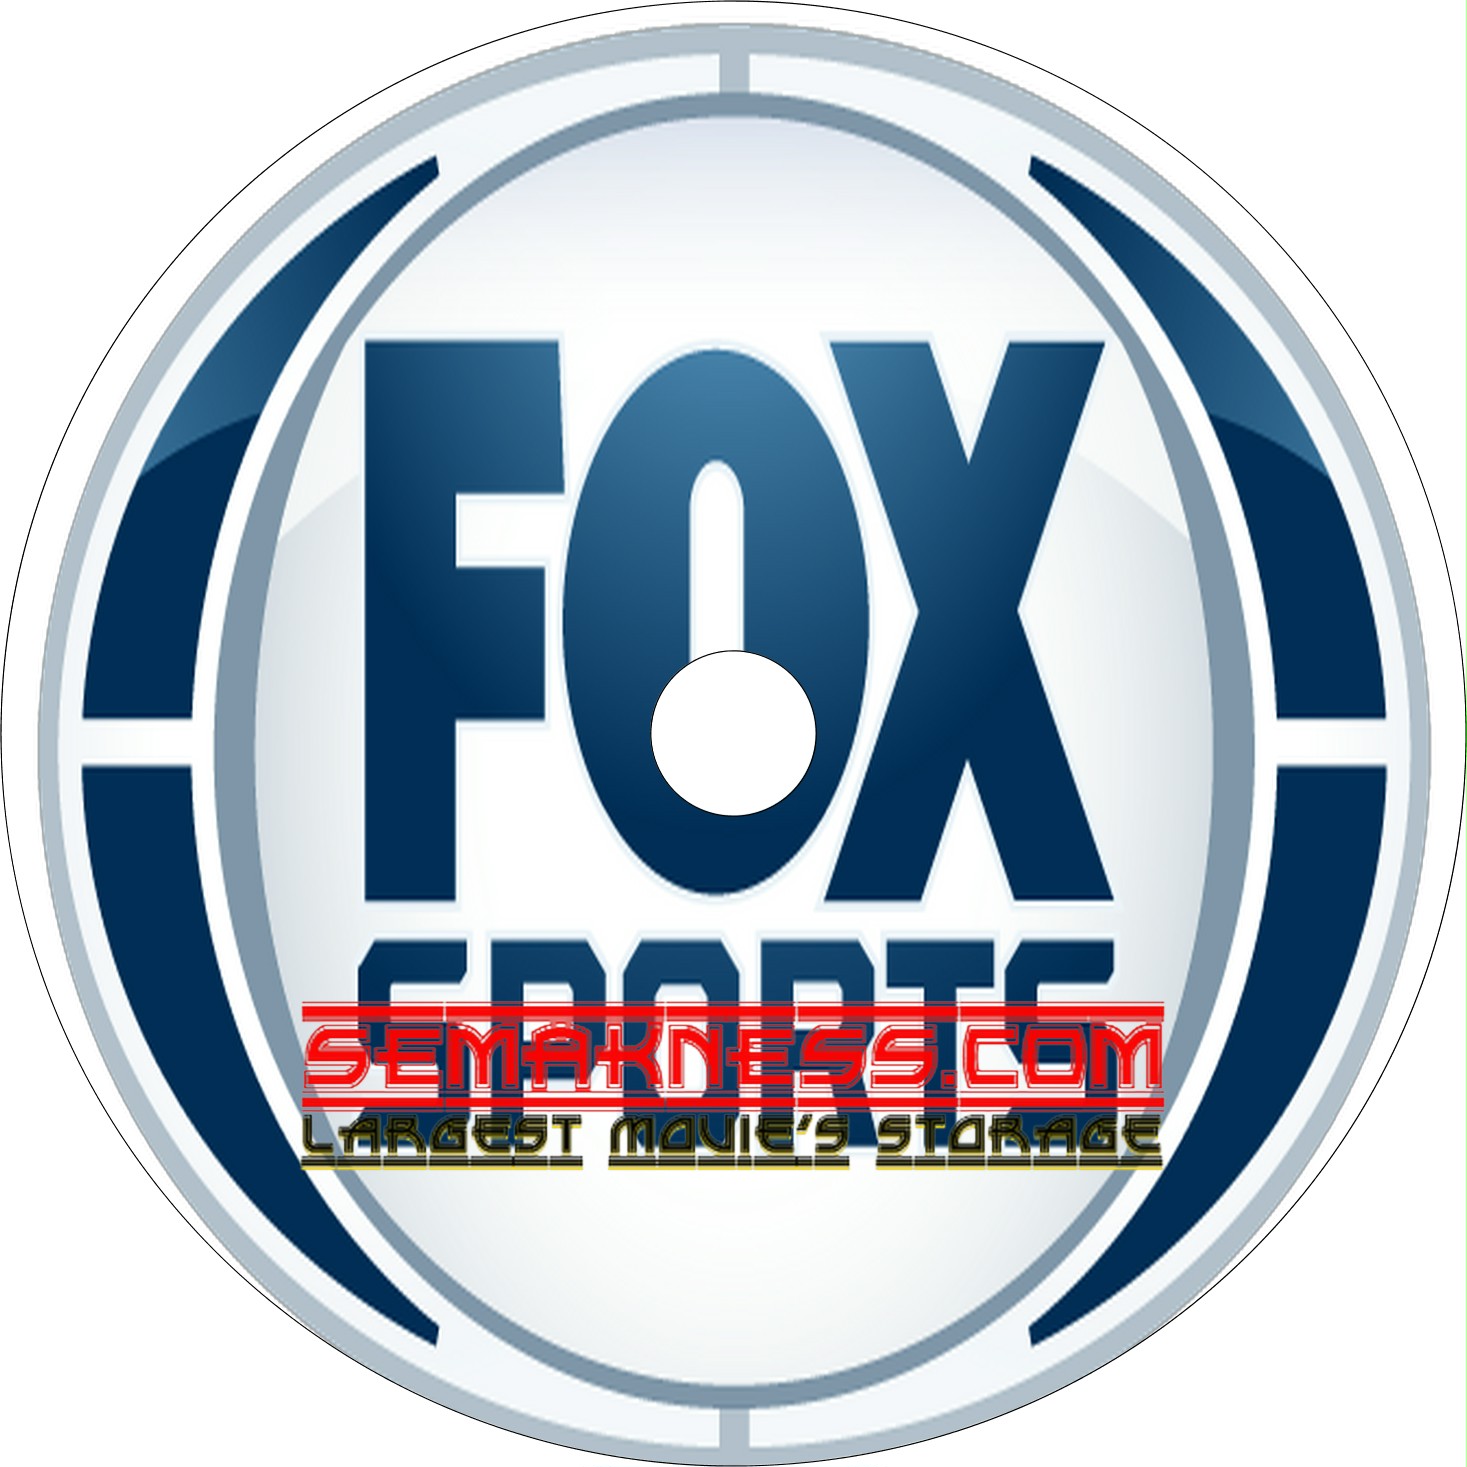 Uefa champions league standings, fox sports online free ...